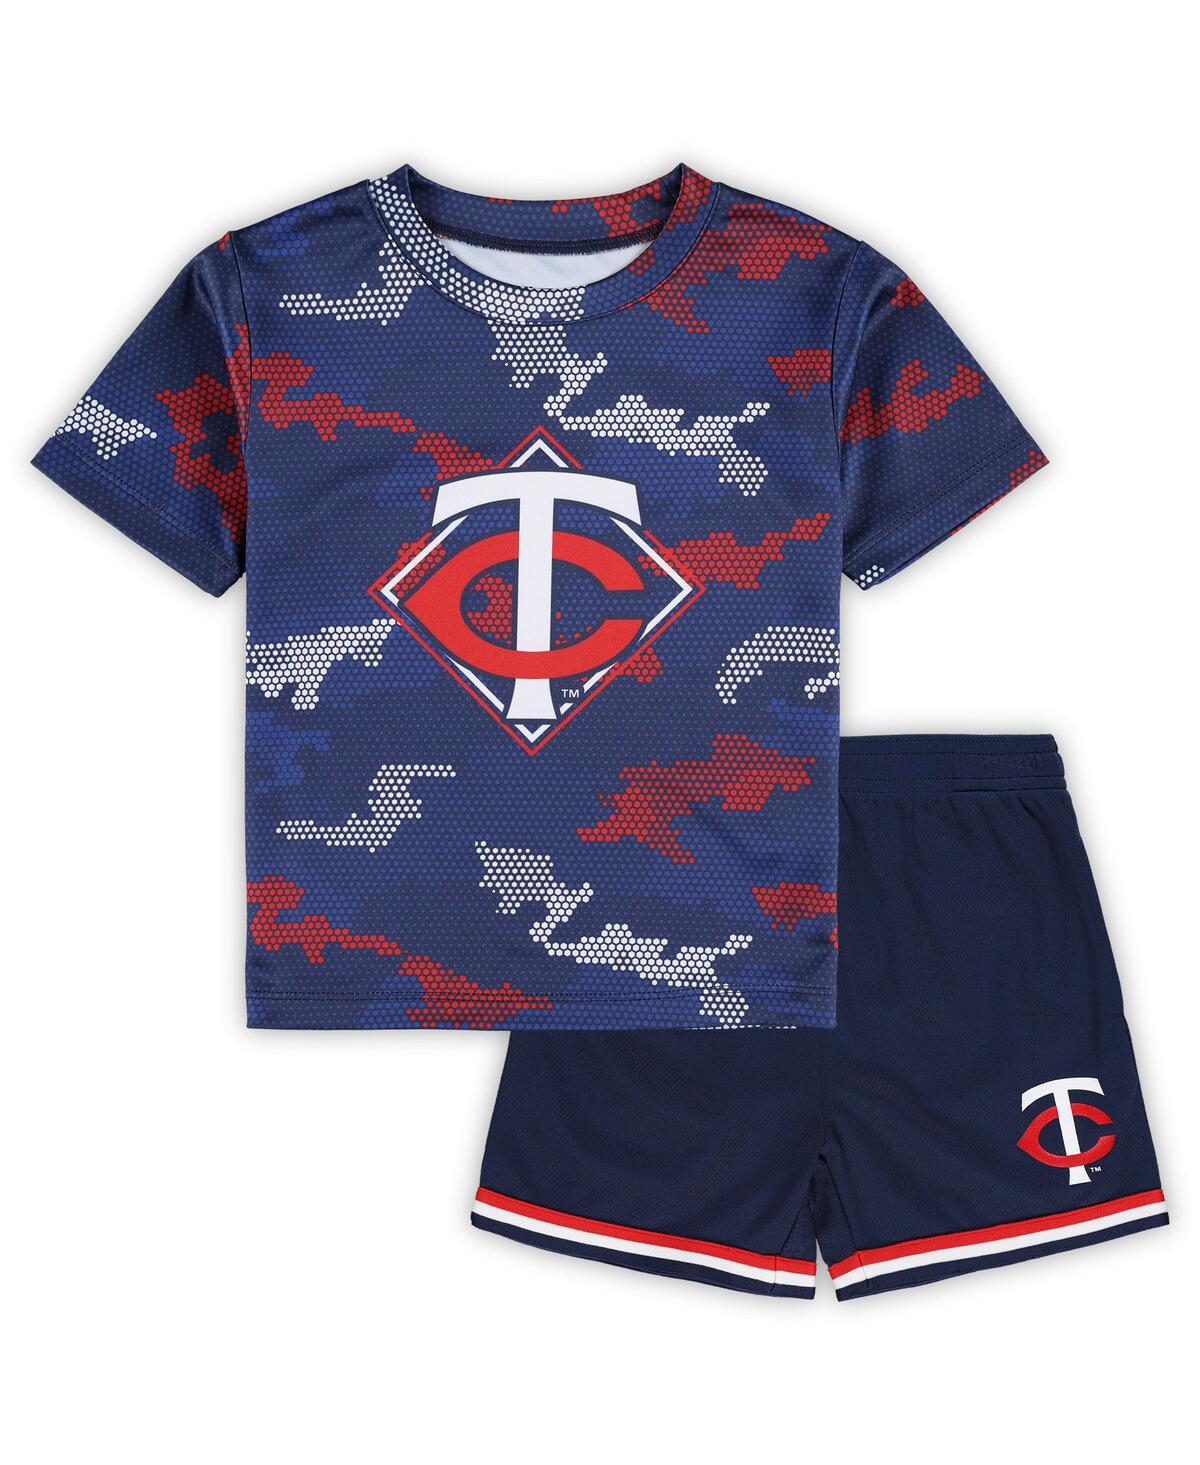 Outerstuff Babies' Toddler Boys And Girls  Navy Minnesota Twins Field Ball T-shirt And Shorts Set